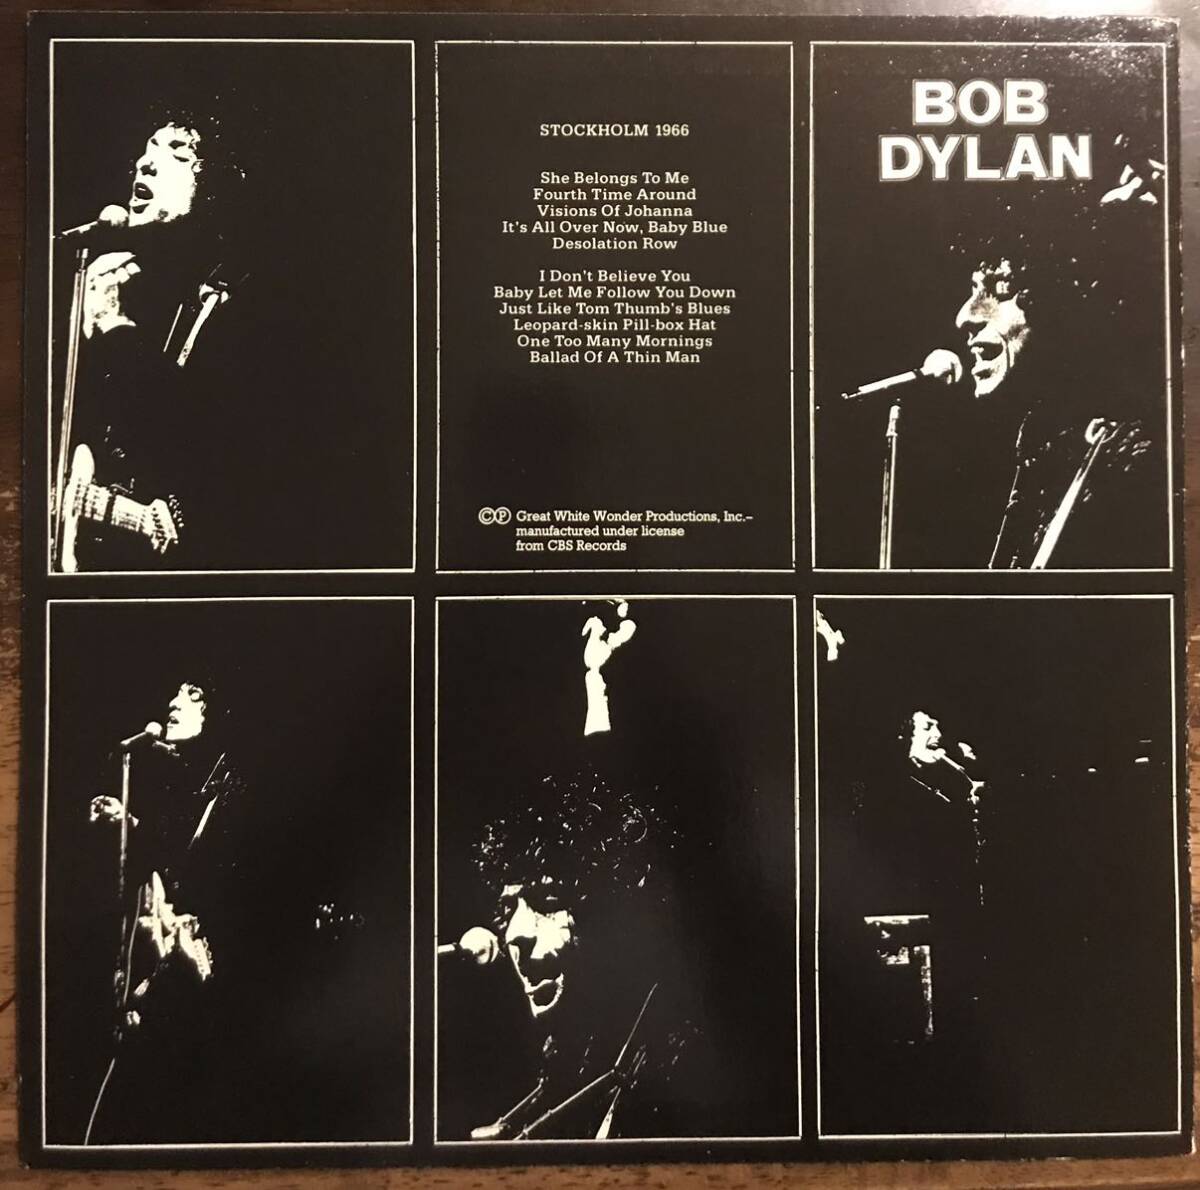 ■BOB DYLAN ■ボブディラン■Stockholm 1966 / 1LP / Stockholm, April 29, 1966 / Excellent Audience Recordings / Marble Vinyl / Veryの画像2